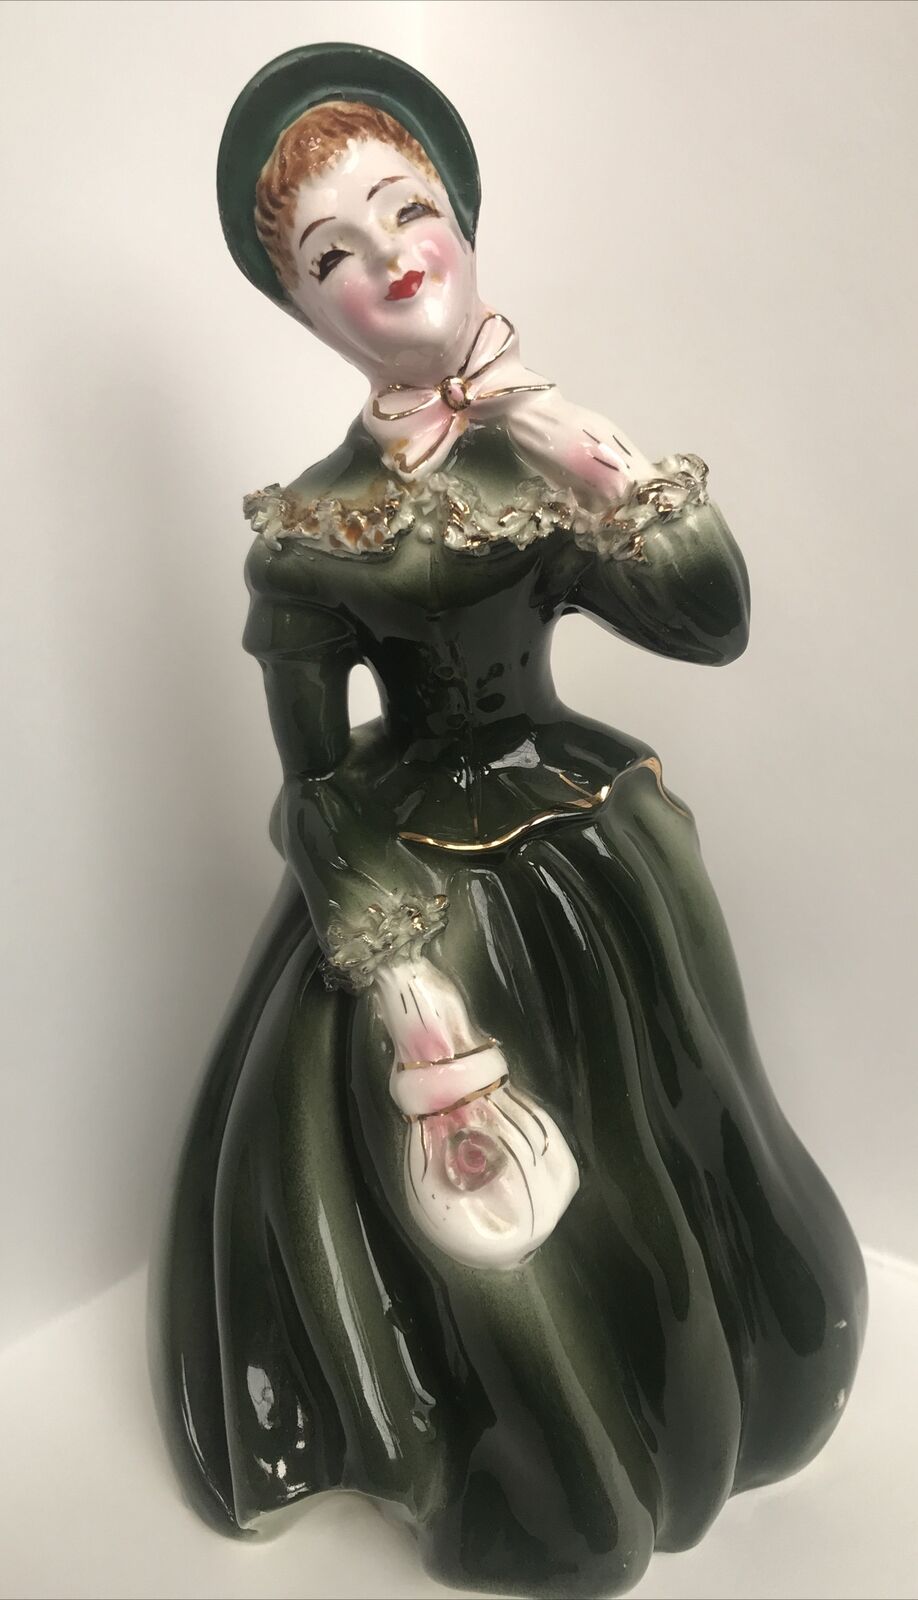 Vintage Napco Lady Figurine Vase Planter Green Dress Bonnet Spaghetti TrimA1744C